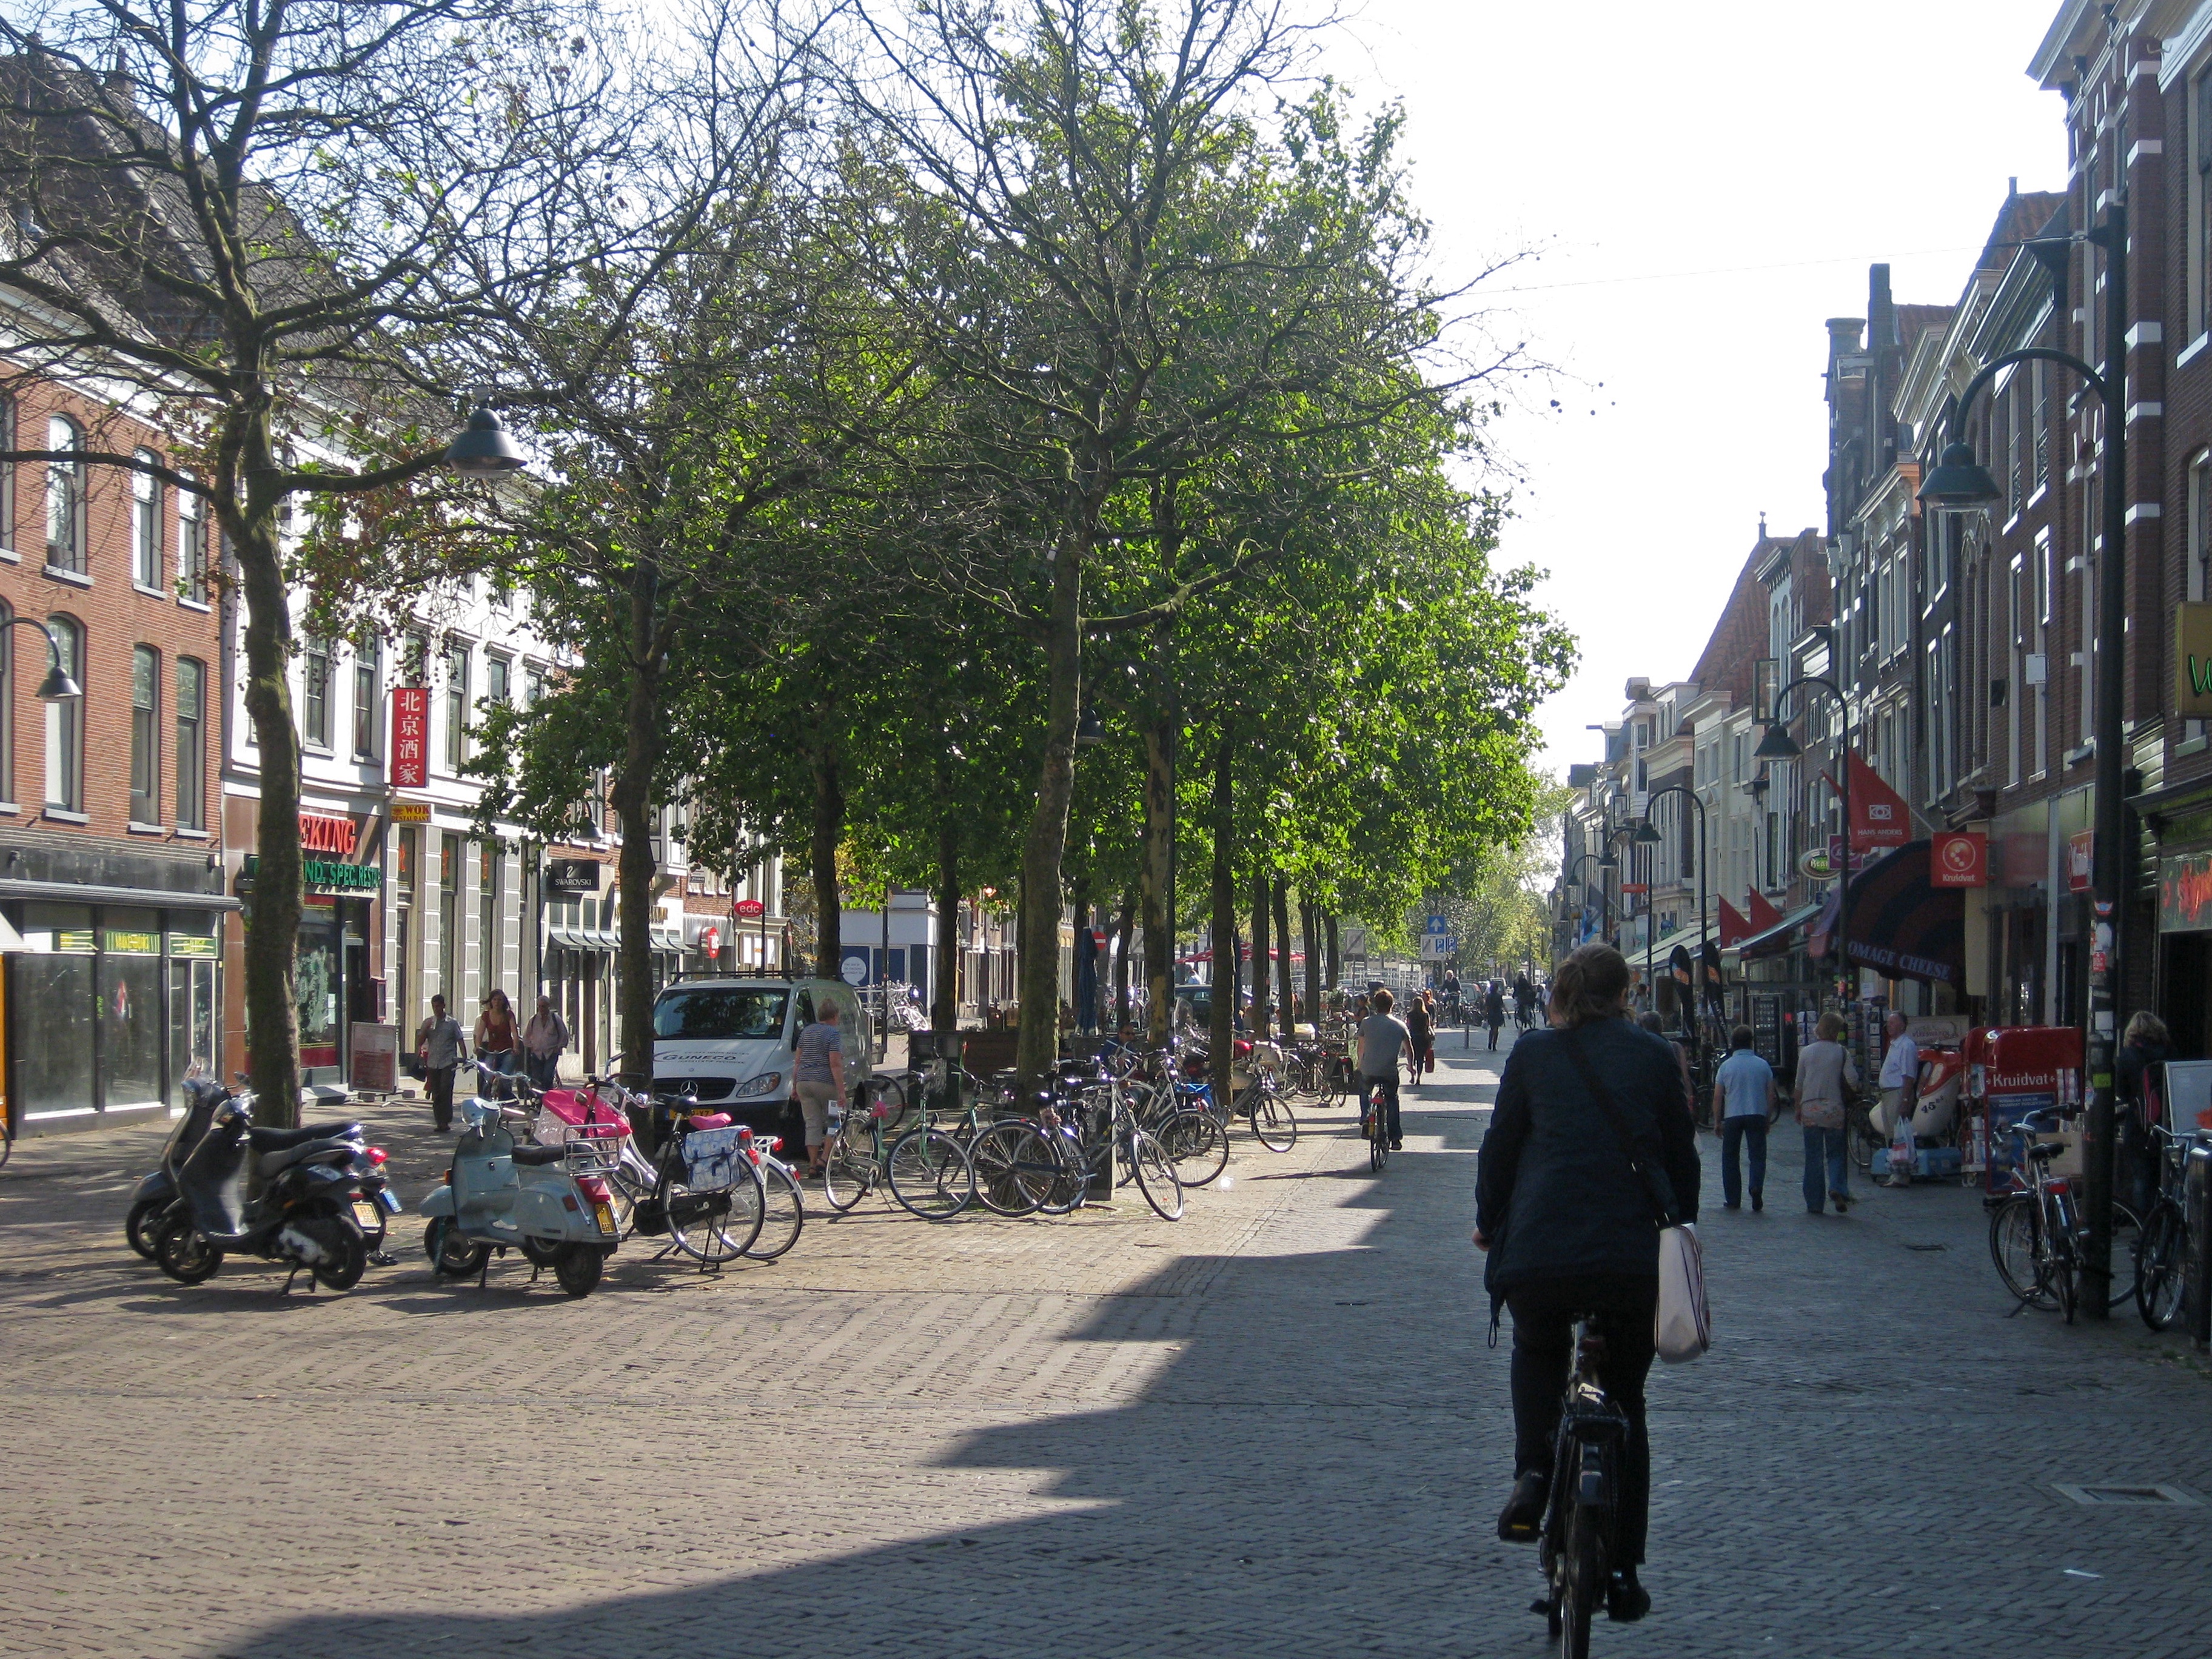 Brabantse Turfmarkt, Delft. Looking south from Burgwal.